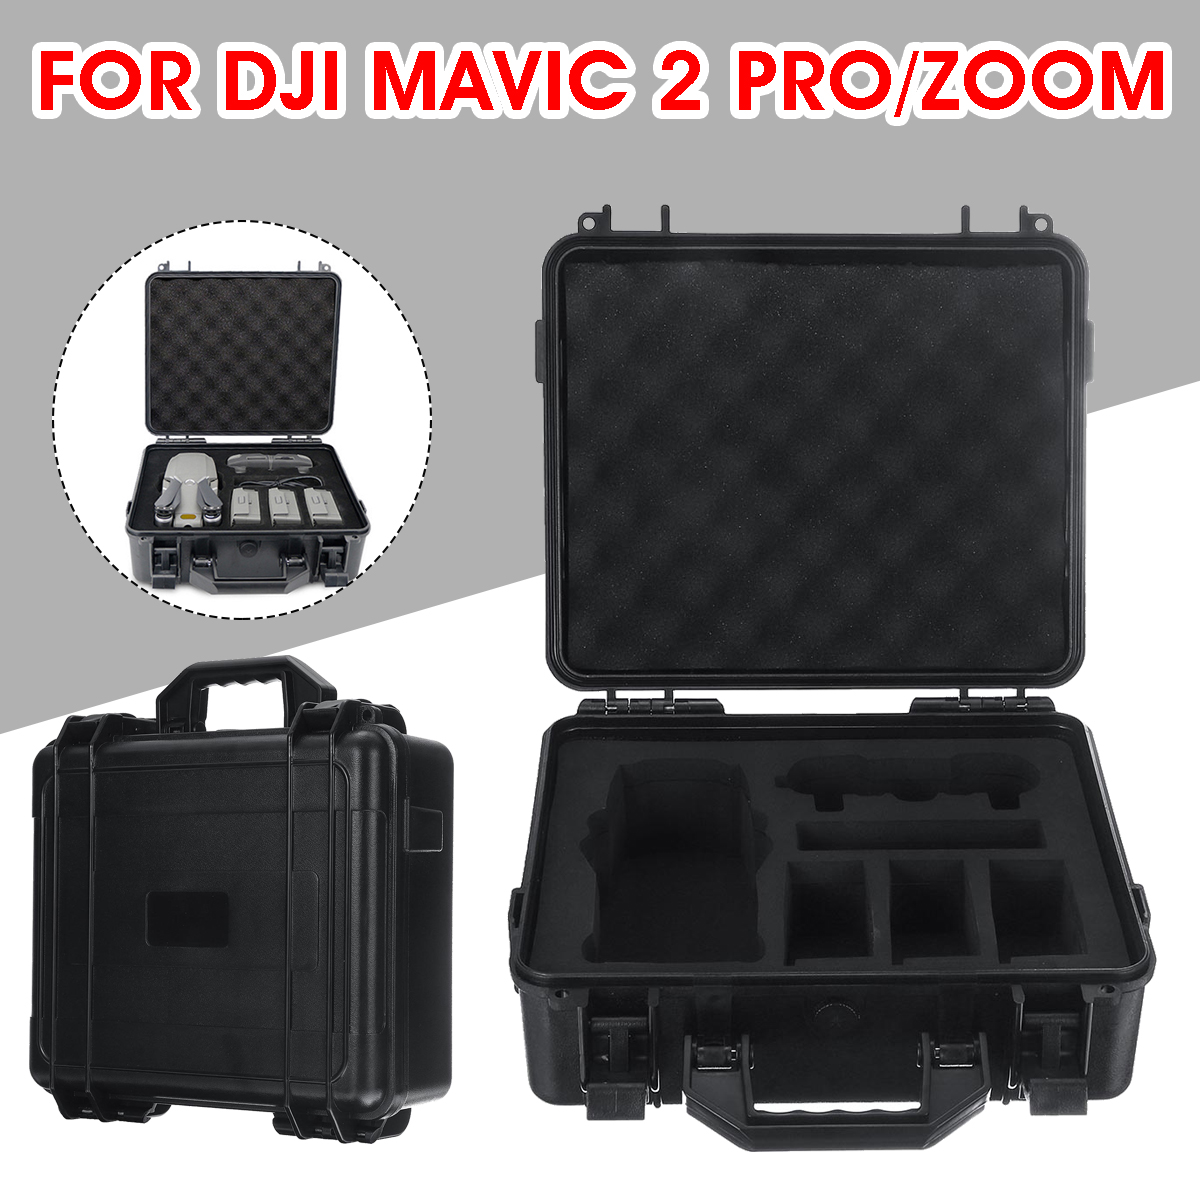 Shockproof-Portable-Carry-Hard-Case-Storage-Bag-Black-For-DJI-Mavic-2-Pro--Zoom-1780566-4